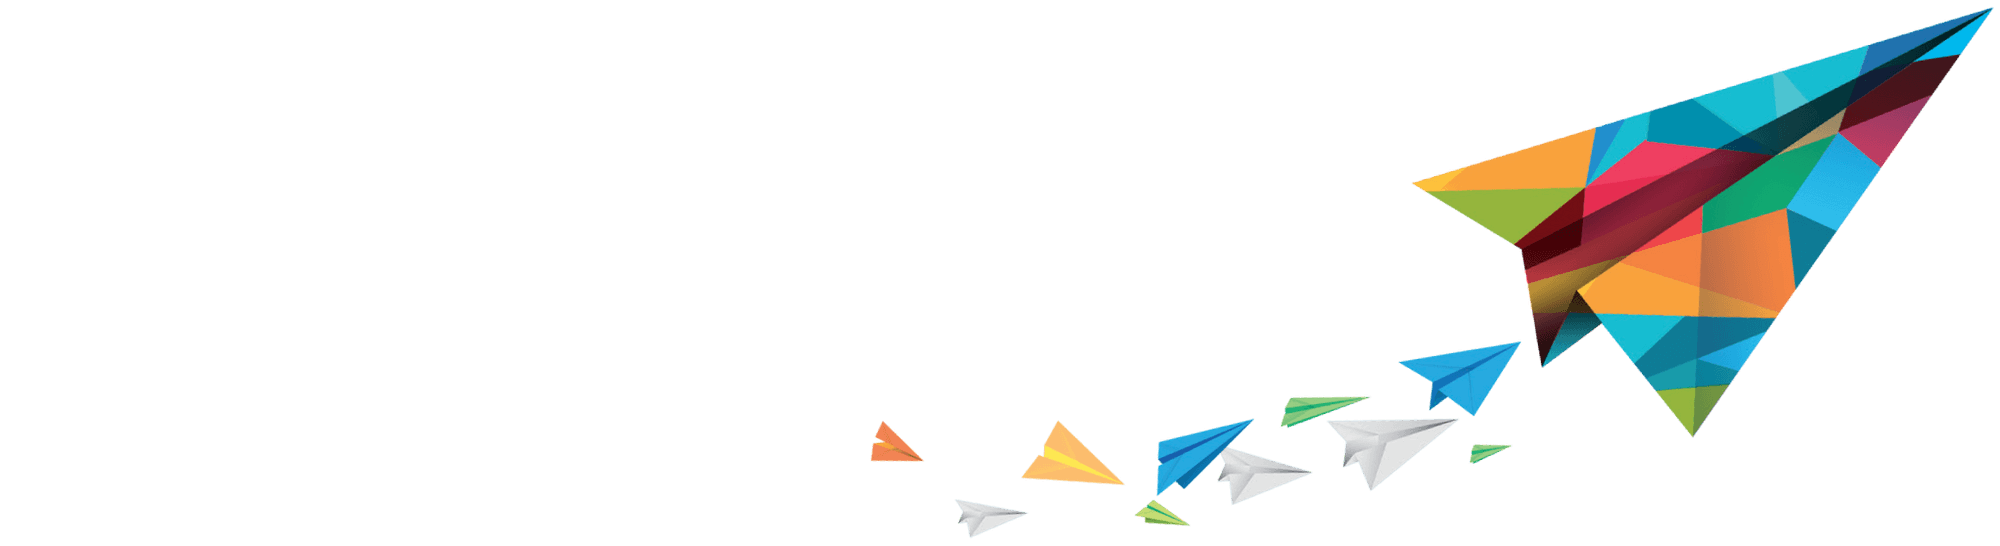 justlogin-logo